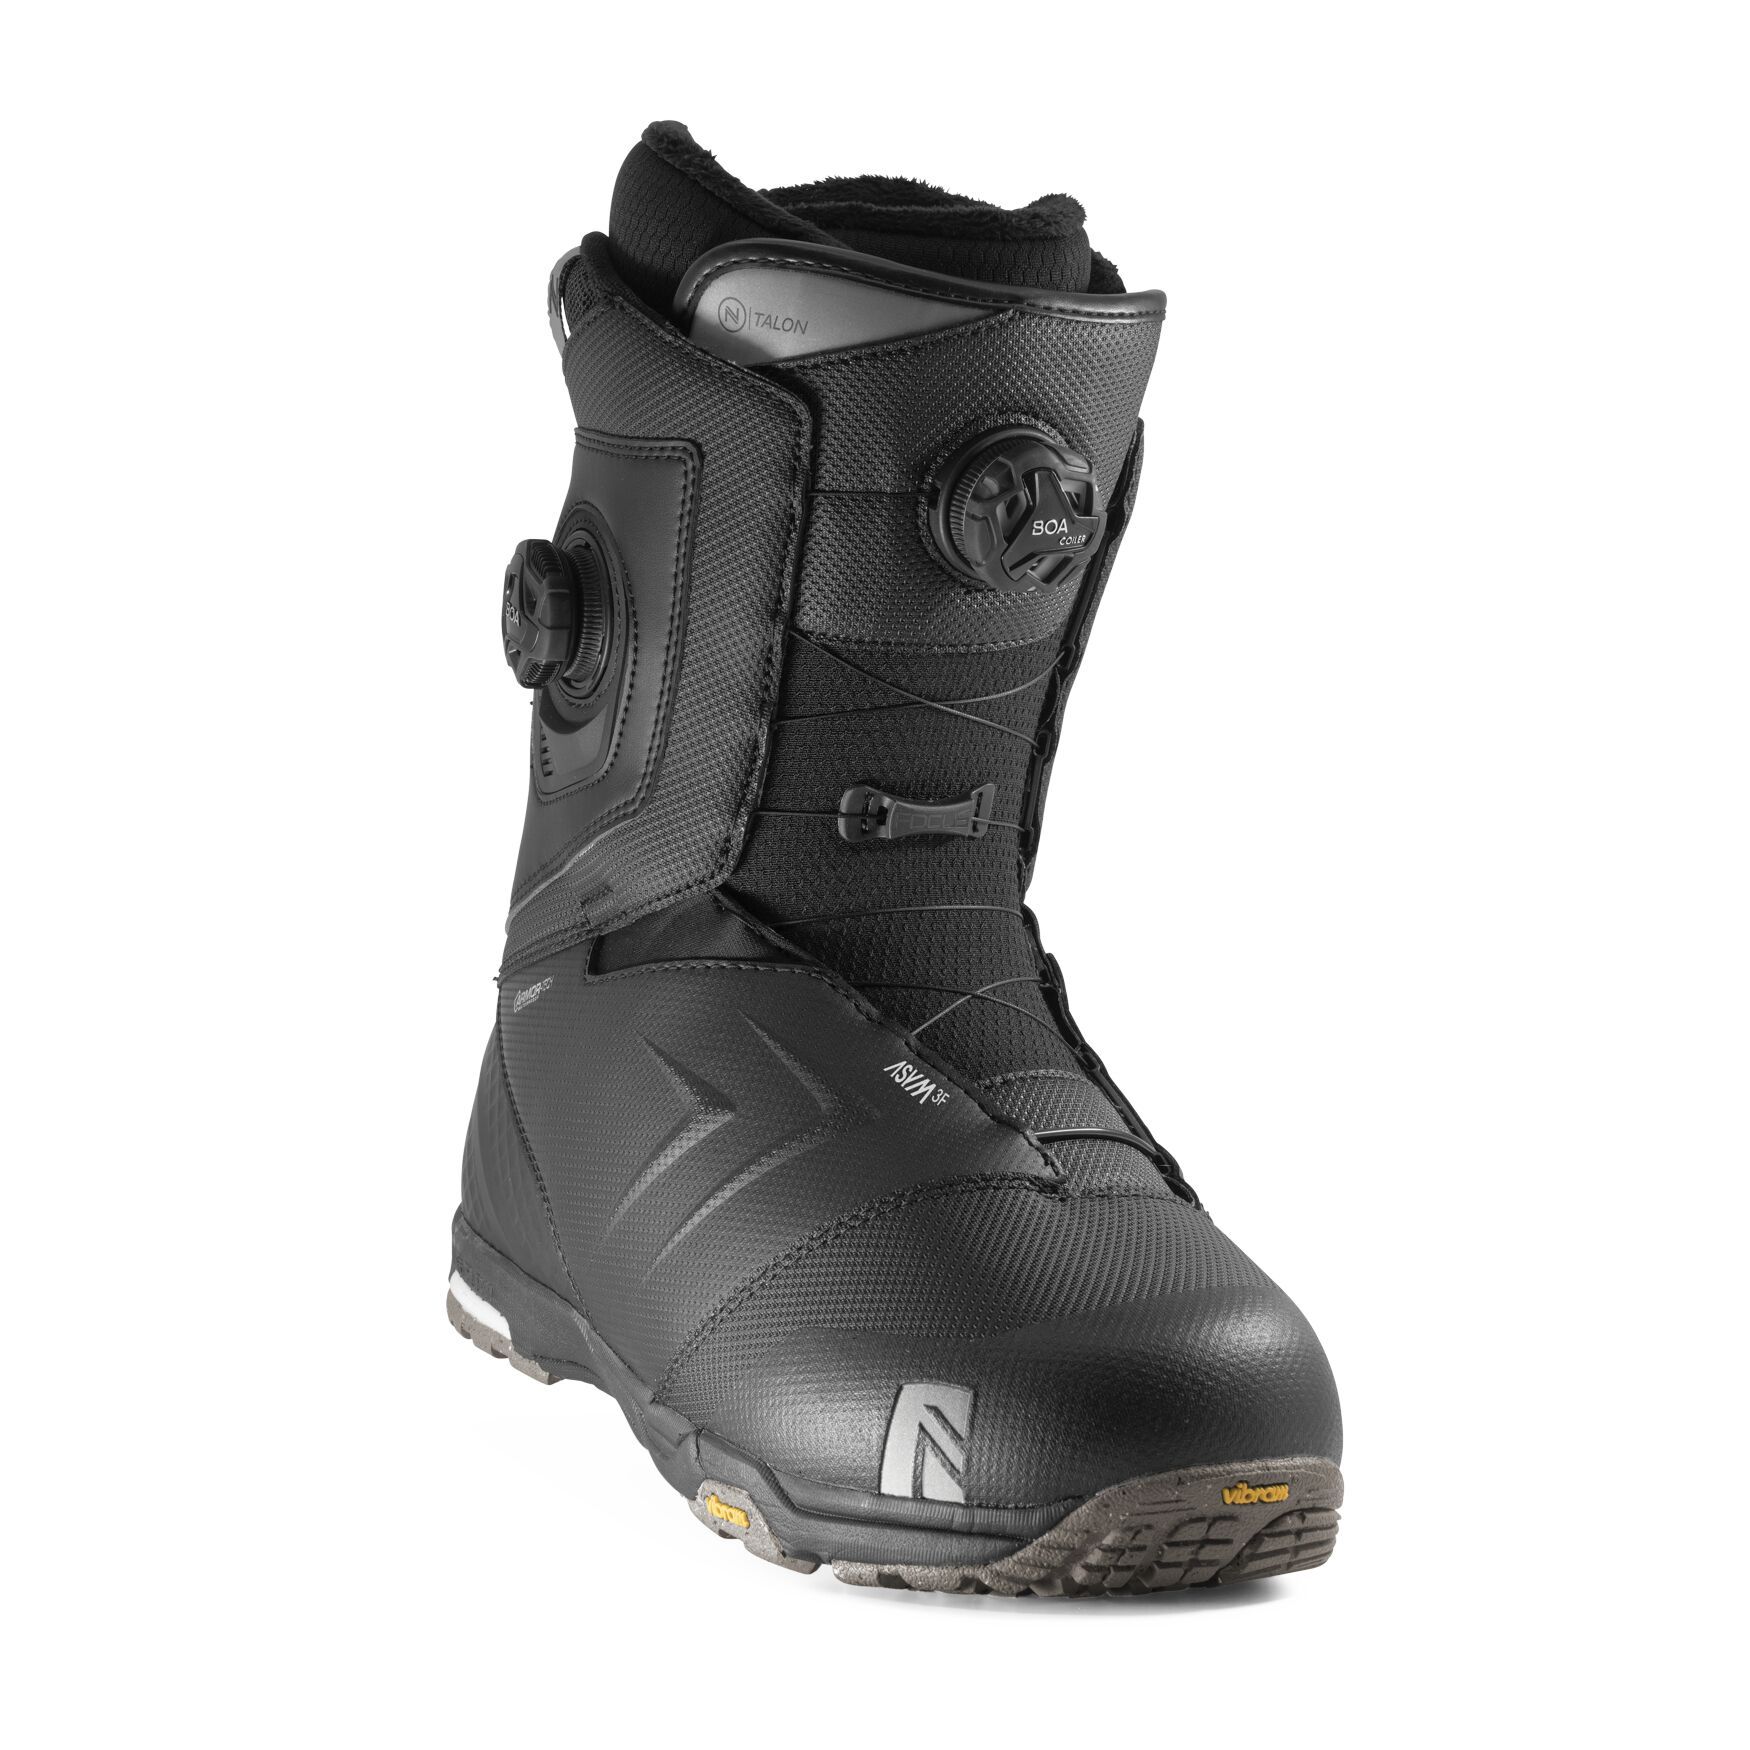 Boots snow Talon Boa Fcs - Noir